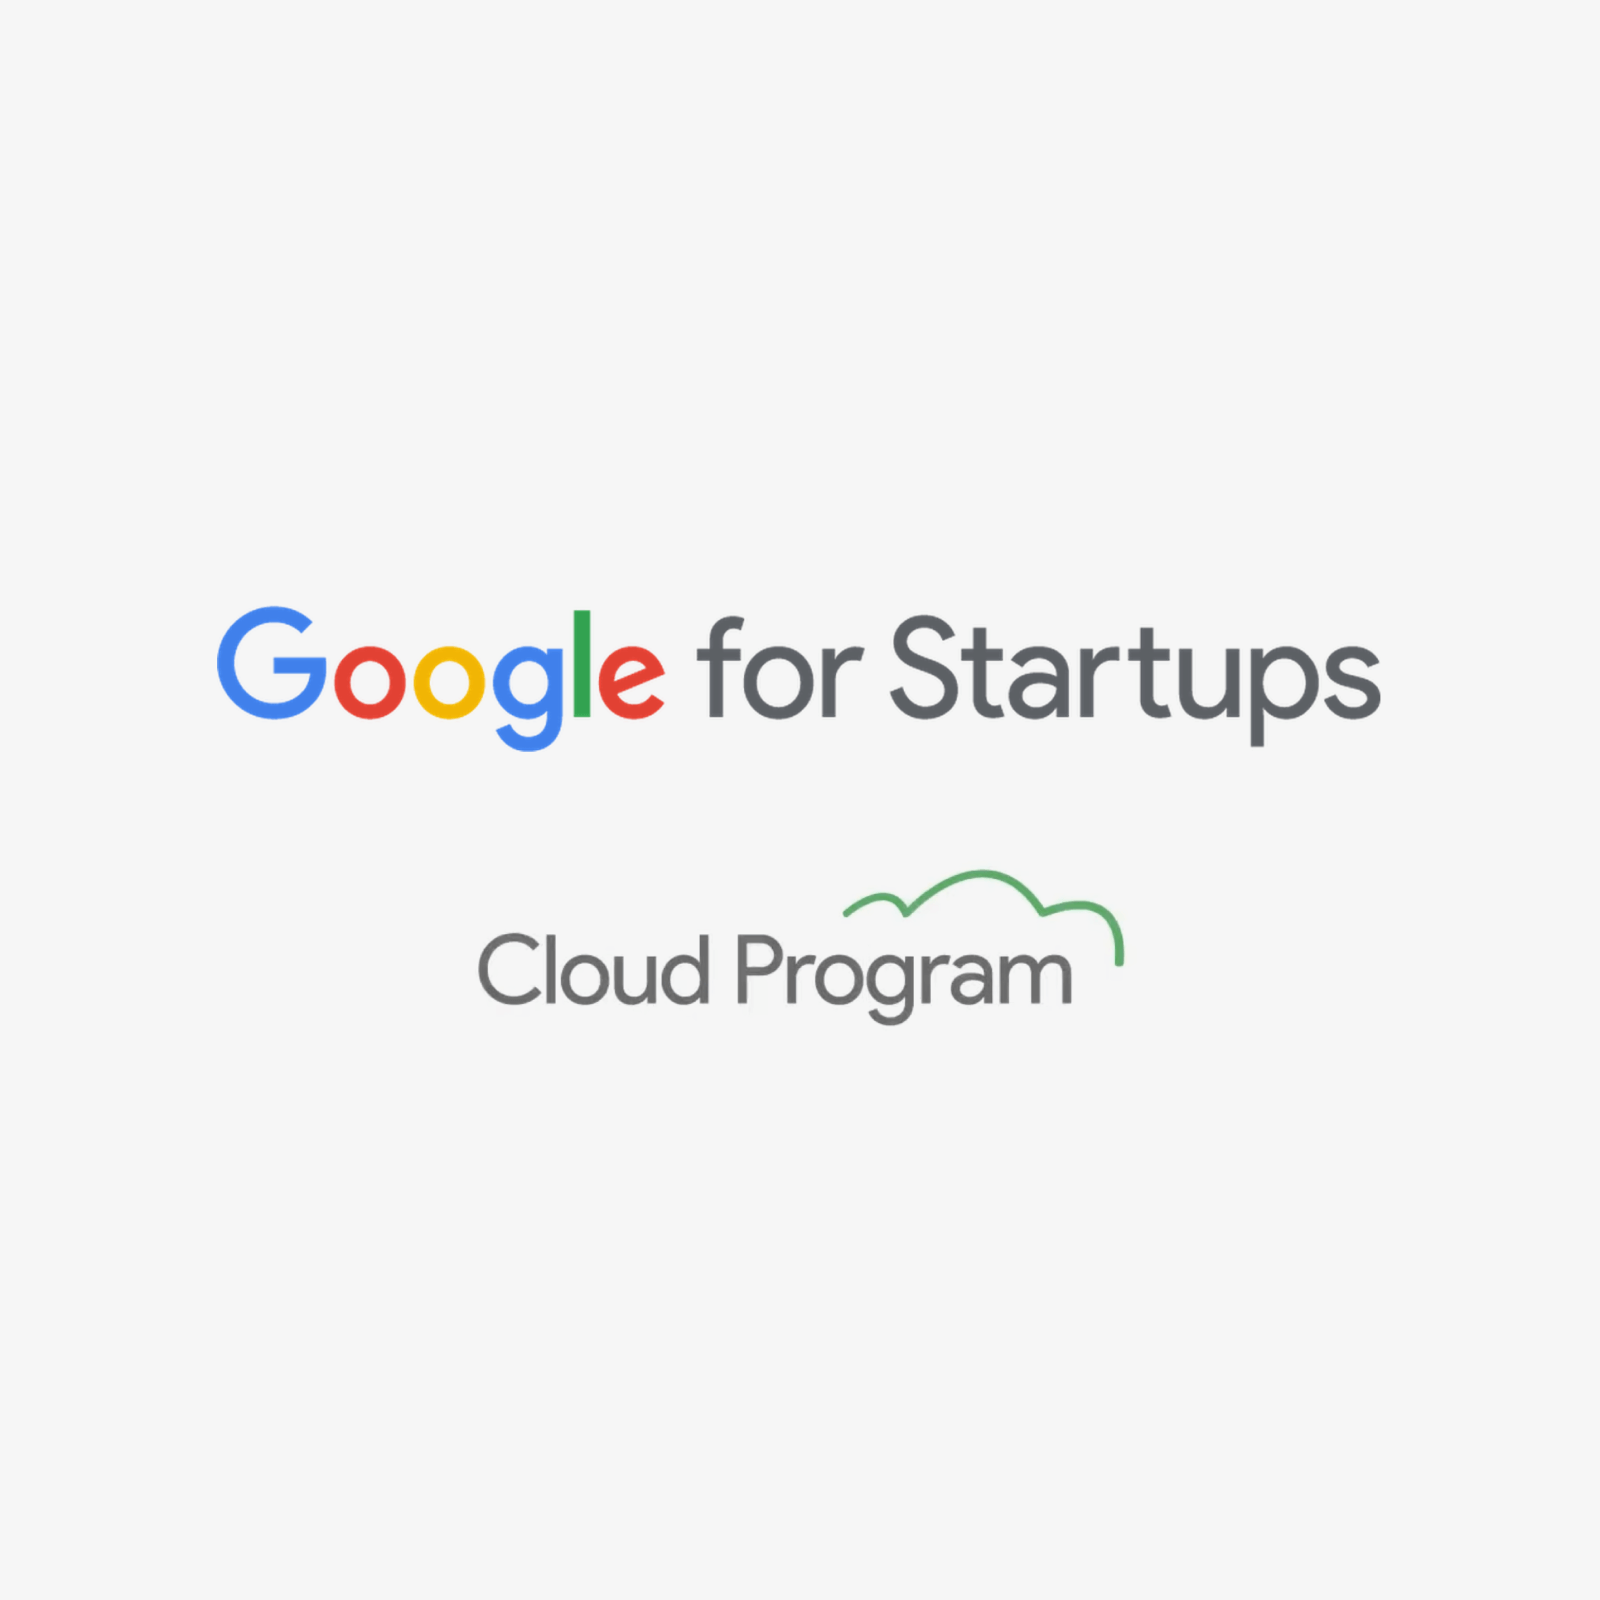 Timerise ya forma parte del Programa Google for Startups Cloud